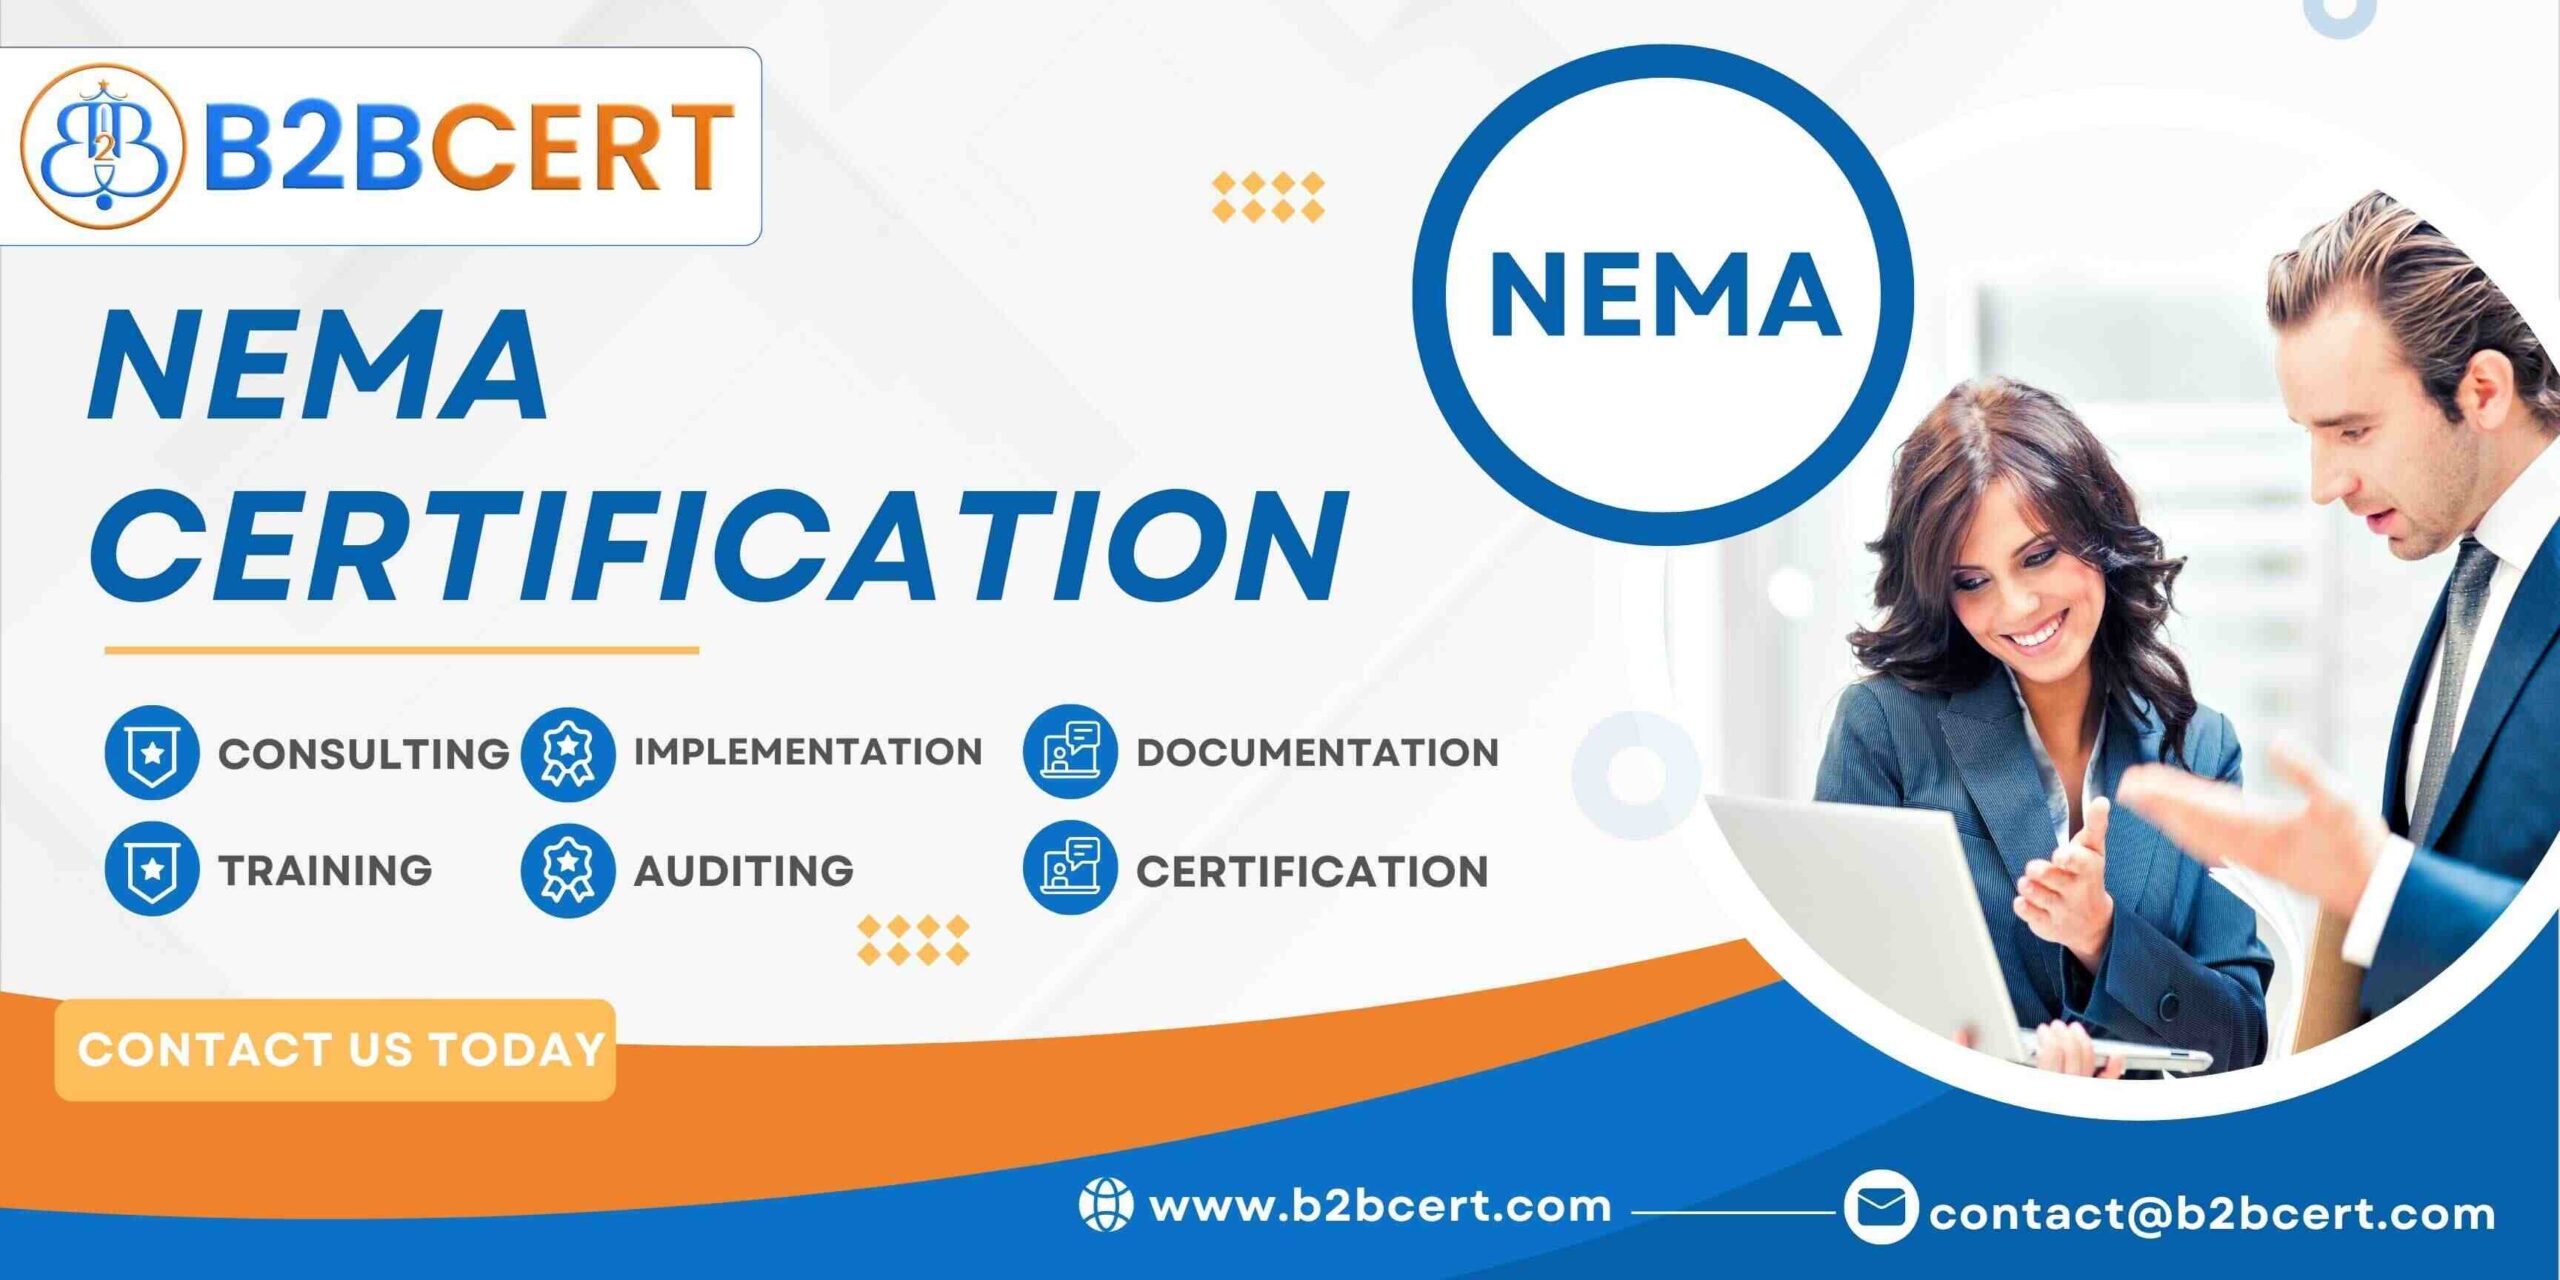 Streamlining Your NEMA Certification Journey